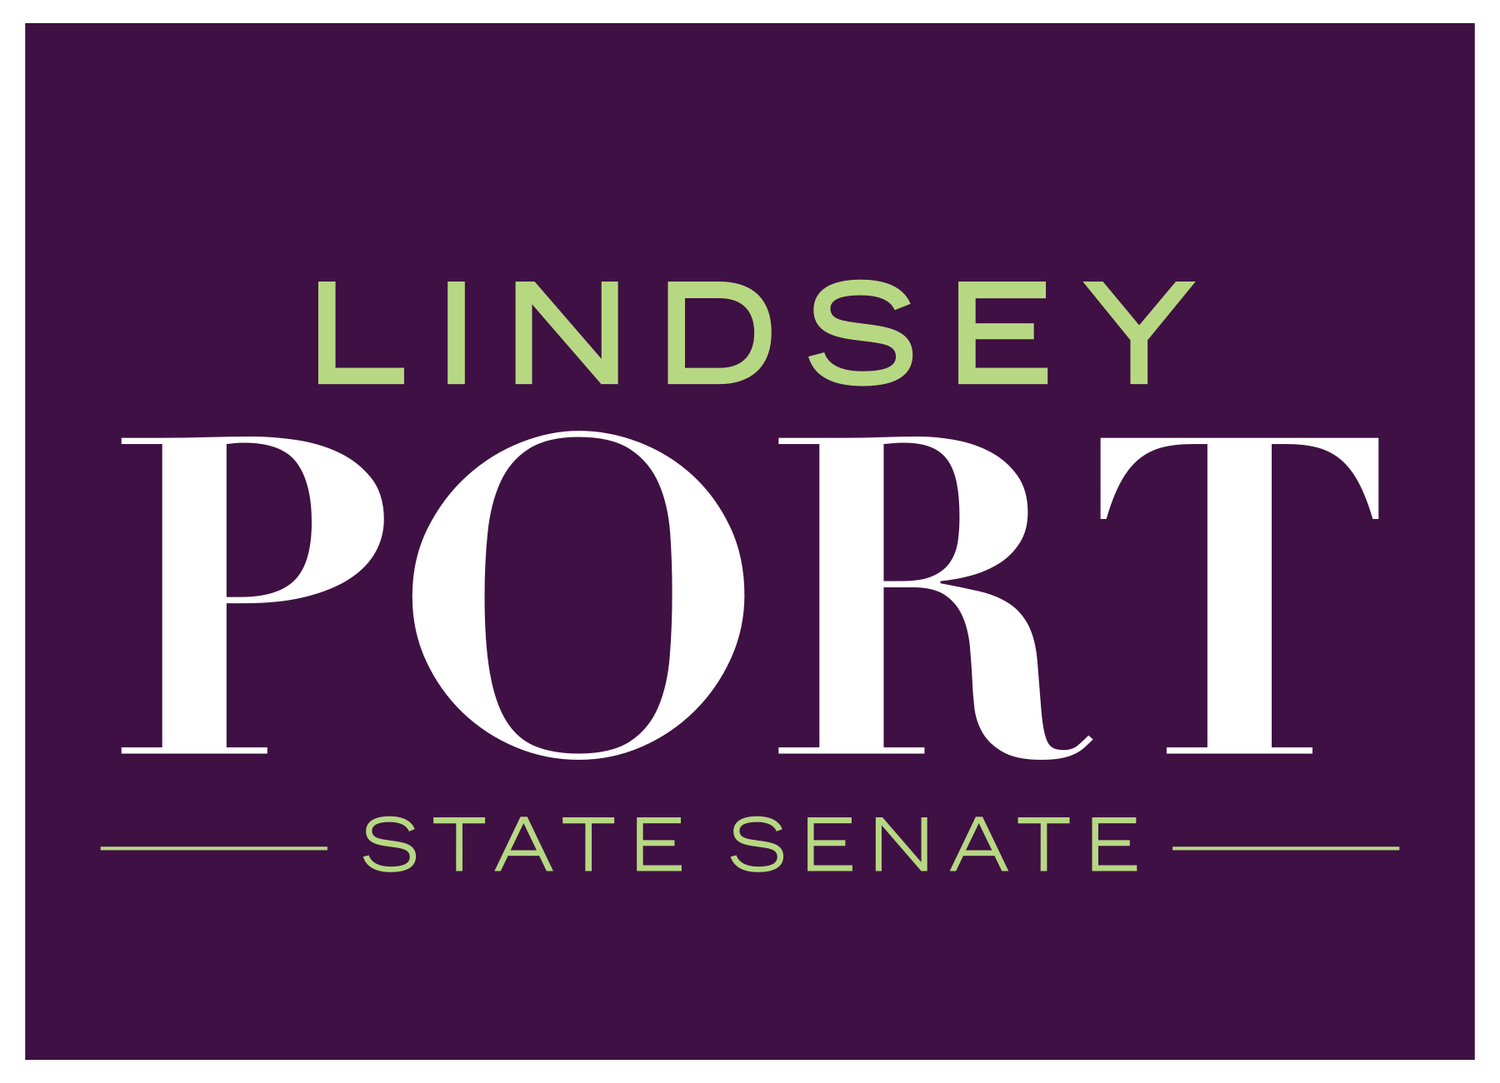 Re-elect Senate Lindsey Port